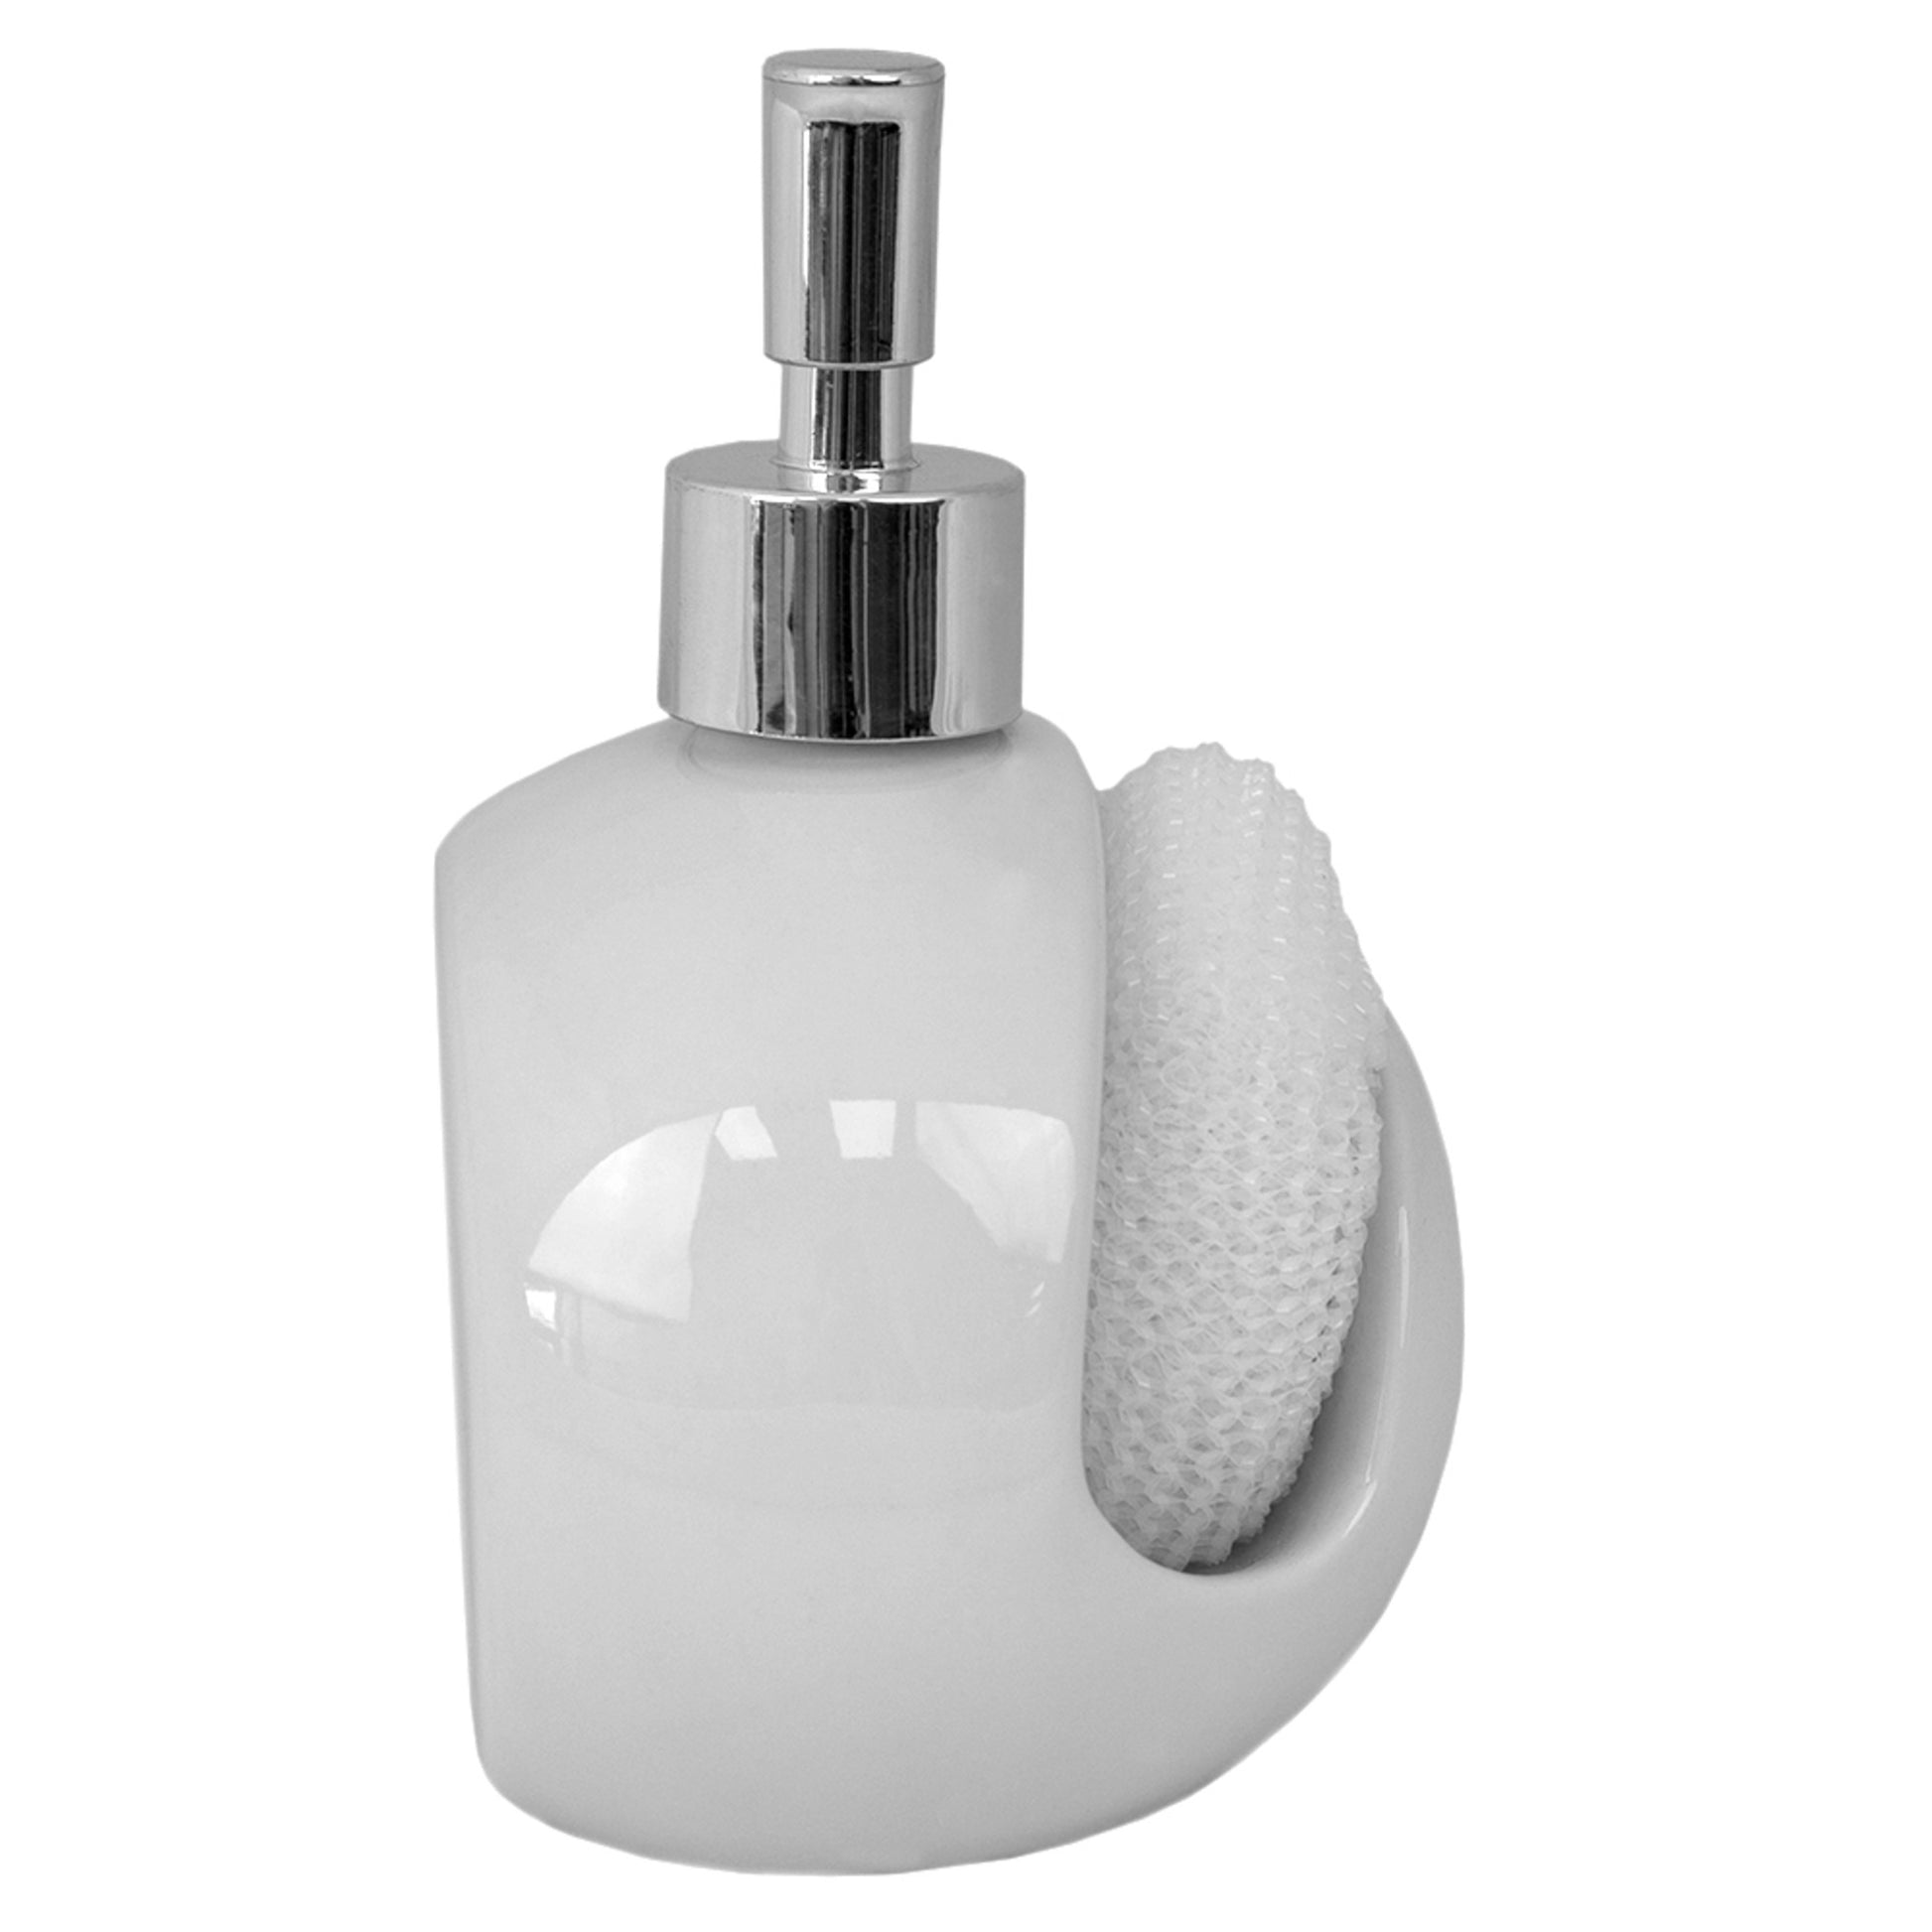 Home Basics Round 8 oz. Ceramic Soap Dispenser with Sponge - White